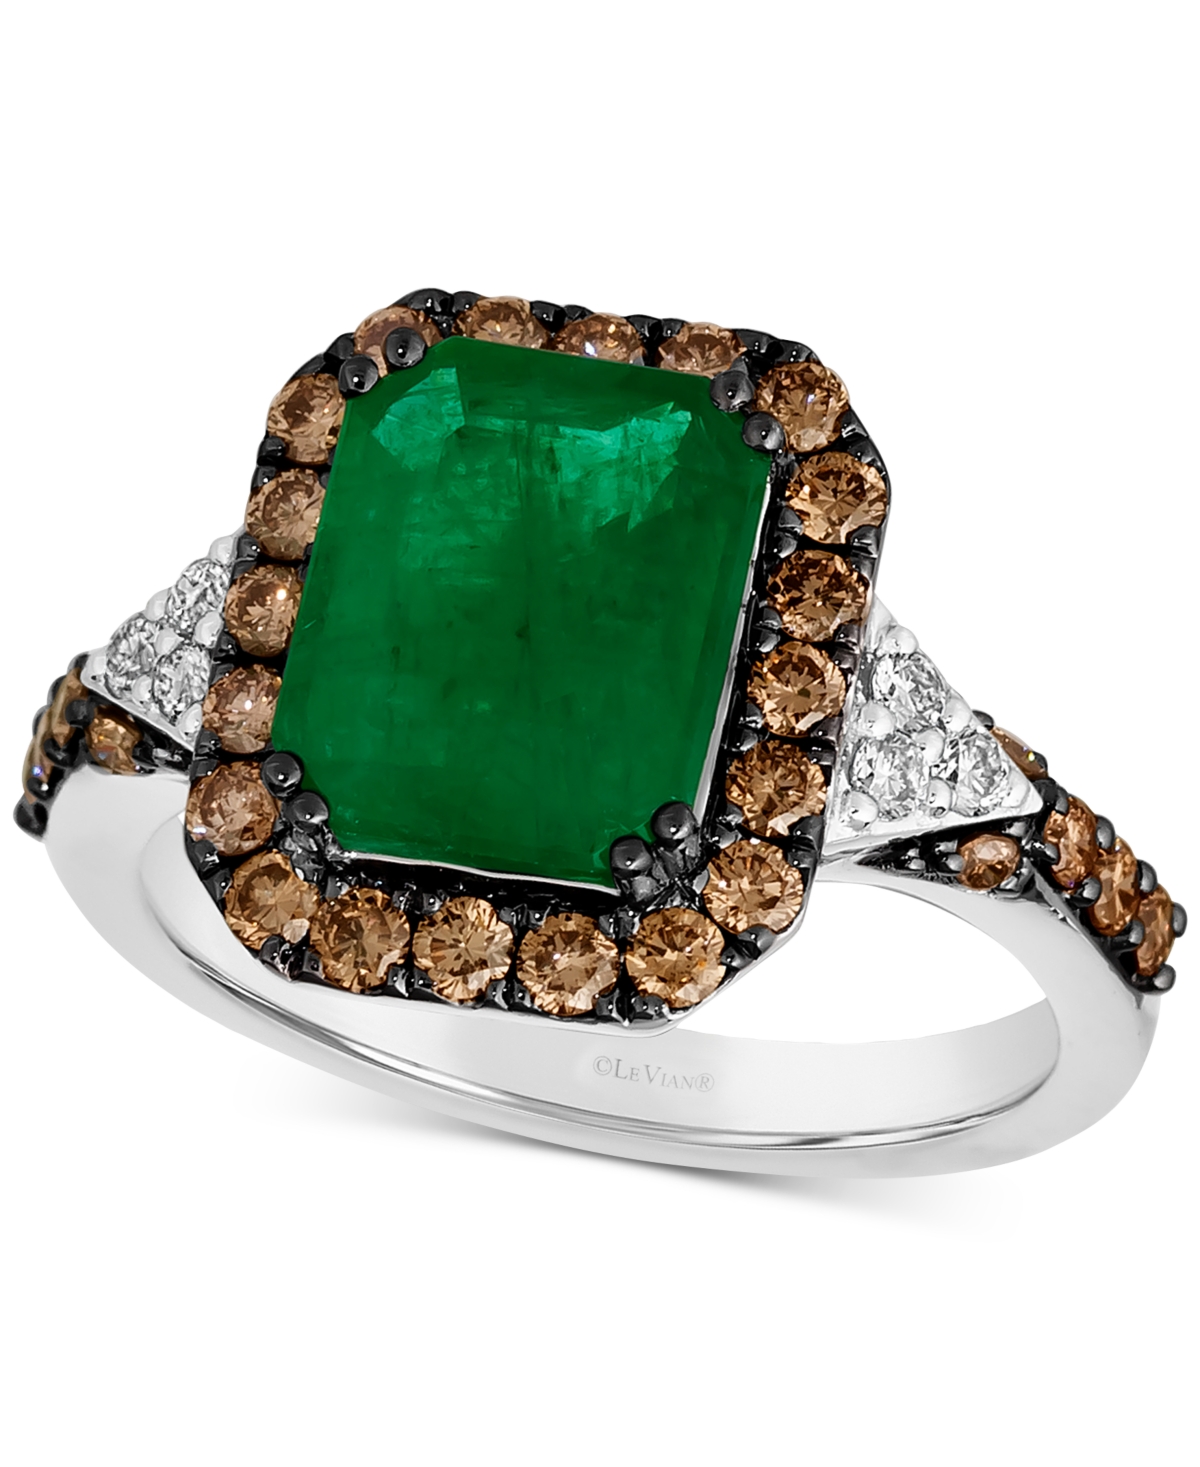 Le Vian Couture Costa Smeralda Emeralds (2-3/8 ct. t.w.), Chocolate Diamonds (5/8 ct. t.w.) & Nude Diamonds (1/10 ct. t.w.) Square Halo Ring in Platinum